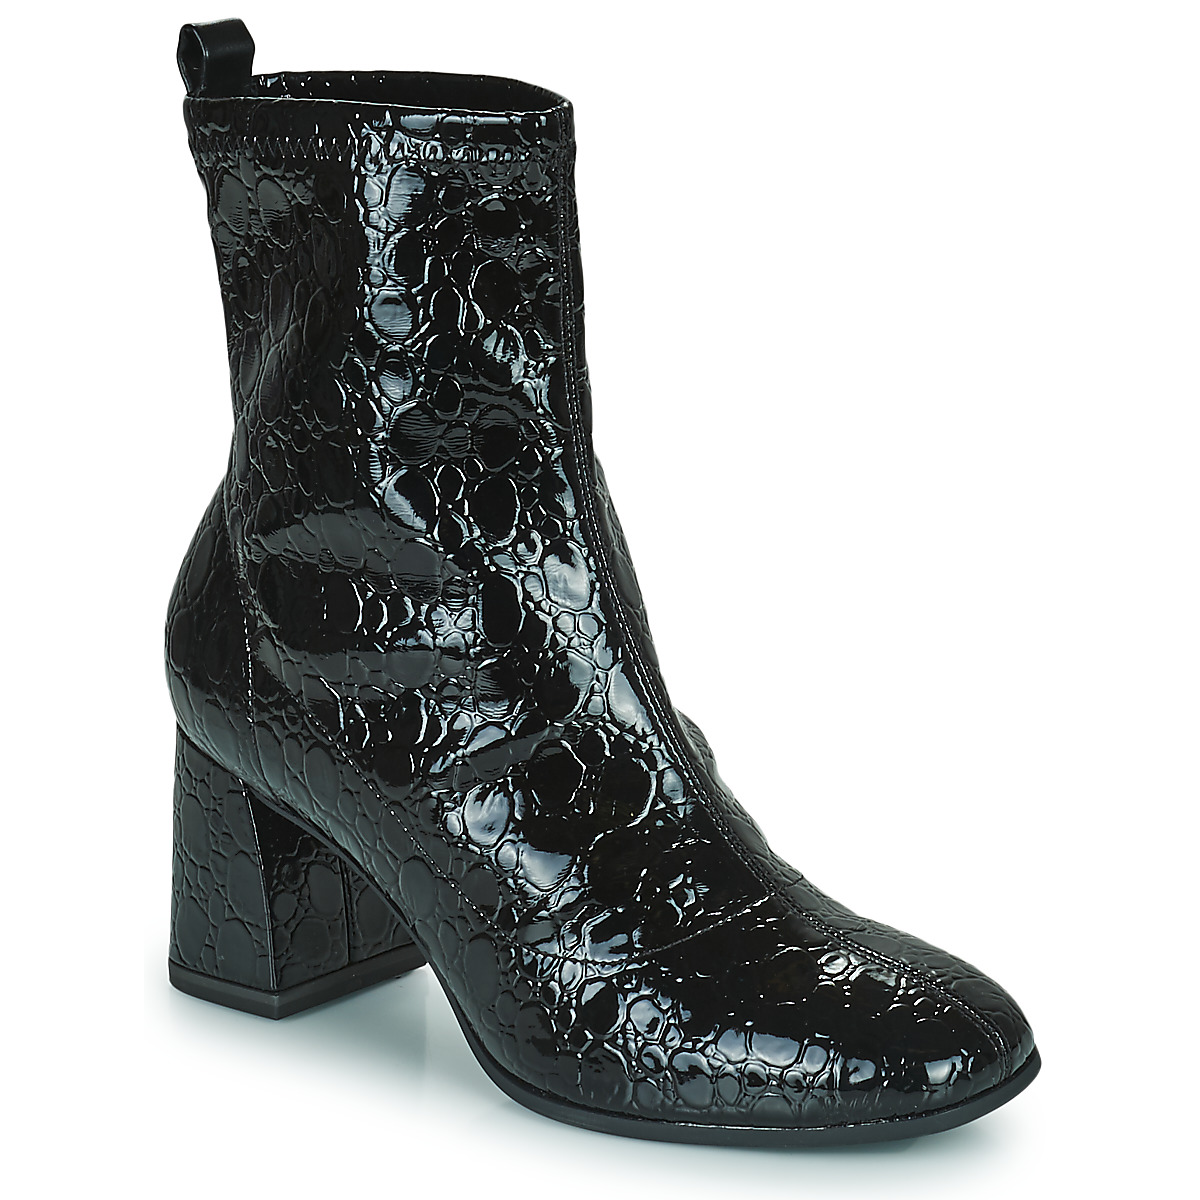 tamaris  25309-033  women's low ankle boots in black